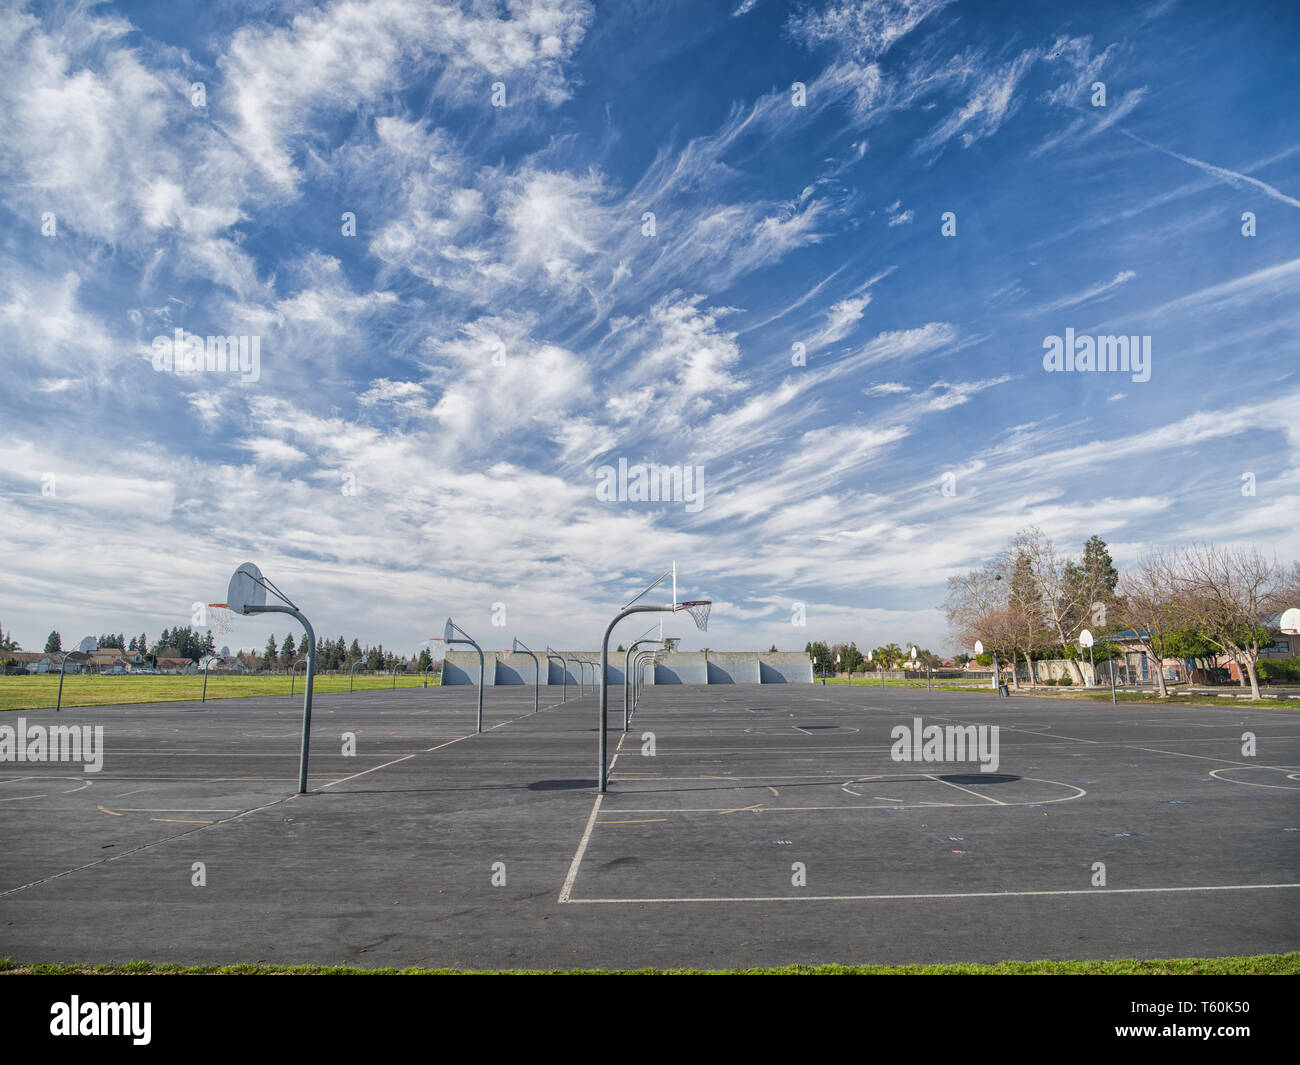 Empty basketball court. Stock Photo